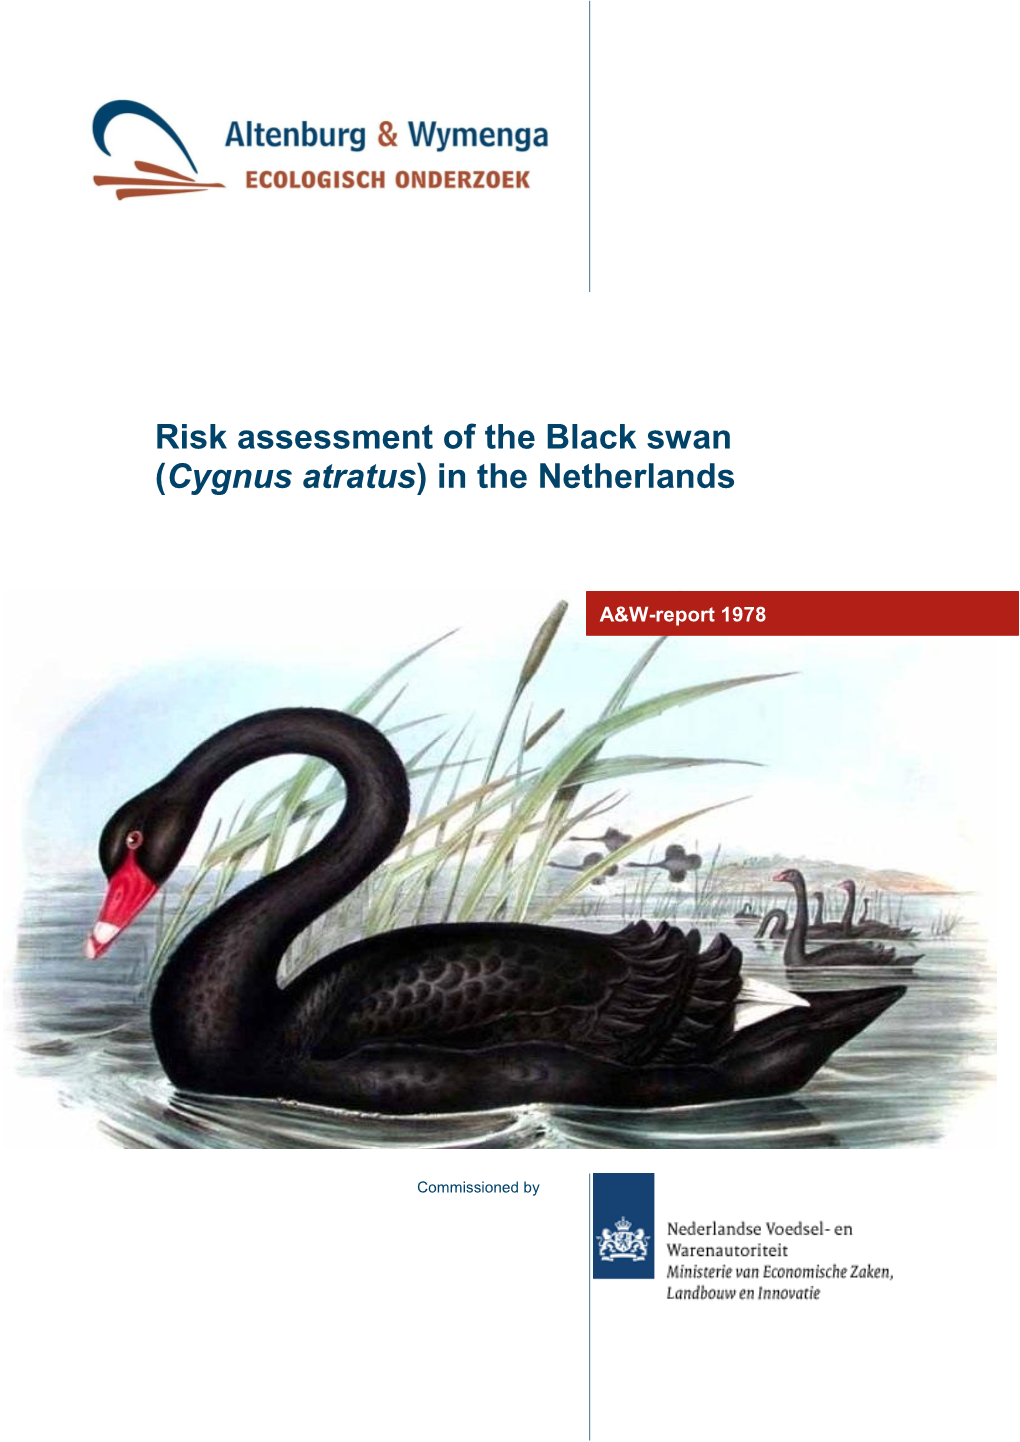 Risk Assessment of the Black Swan (Cygnus Atratus) in the Netherlands